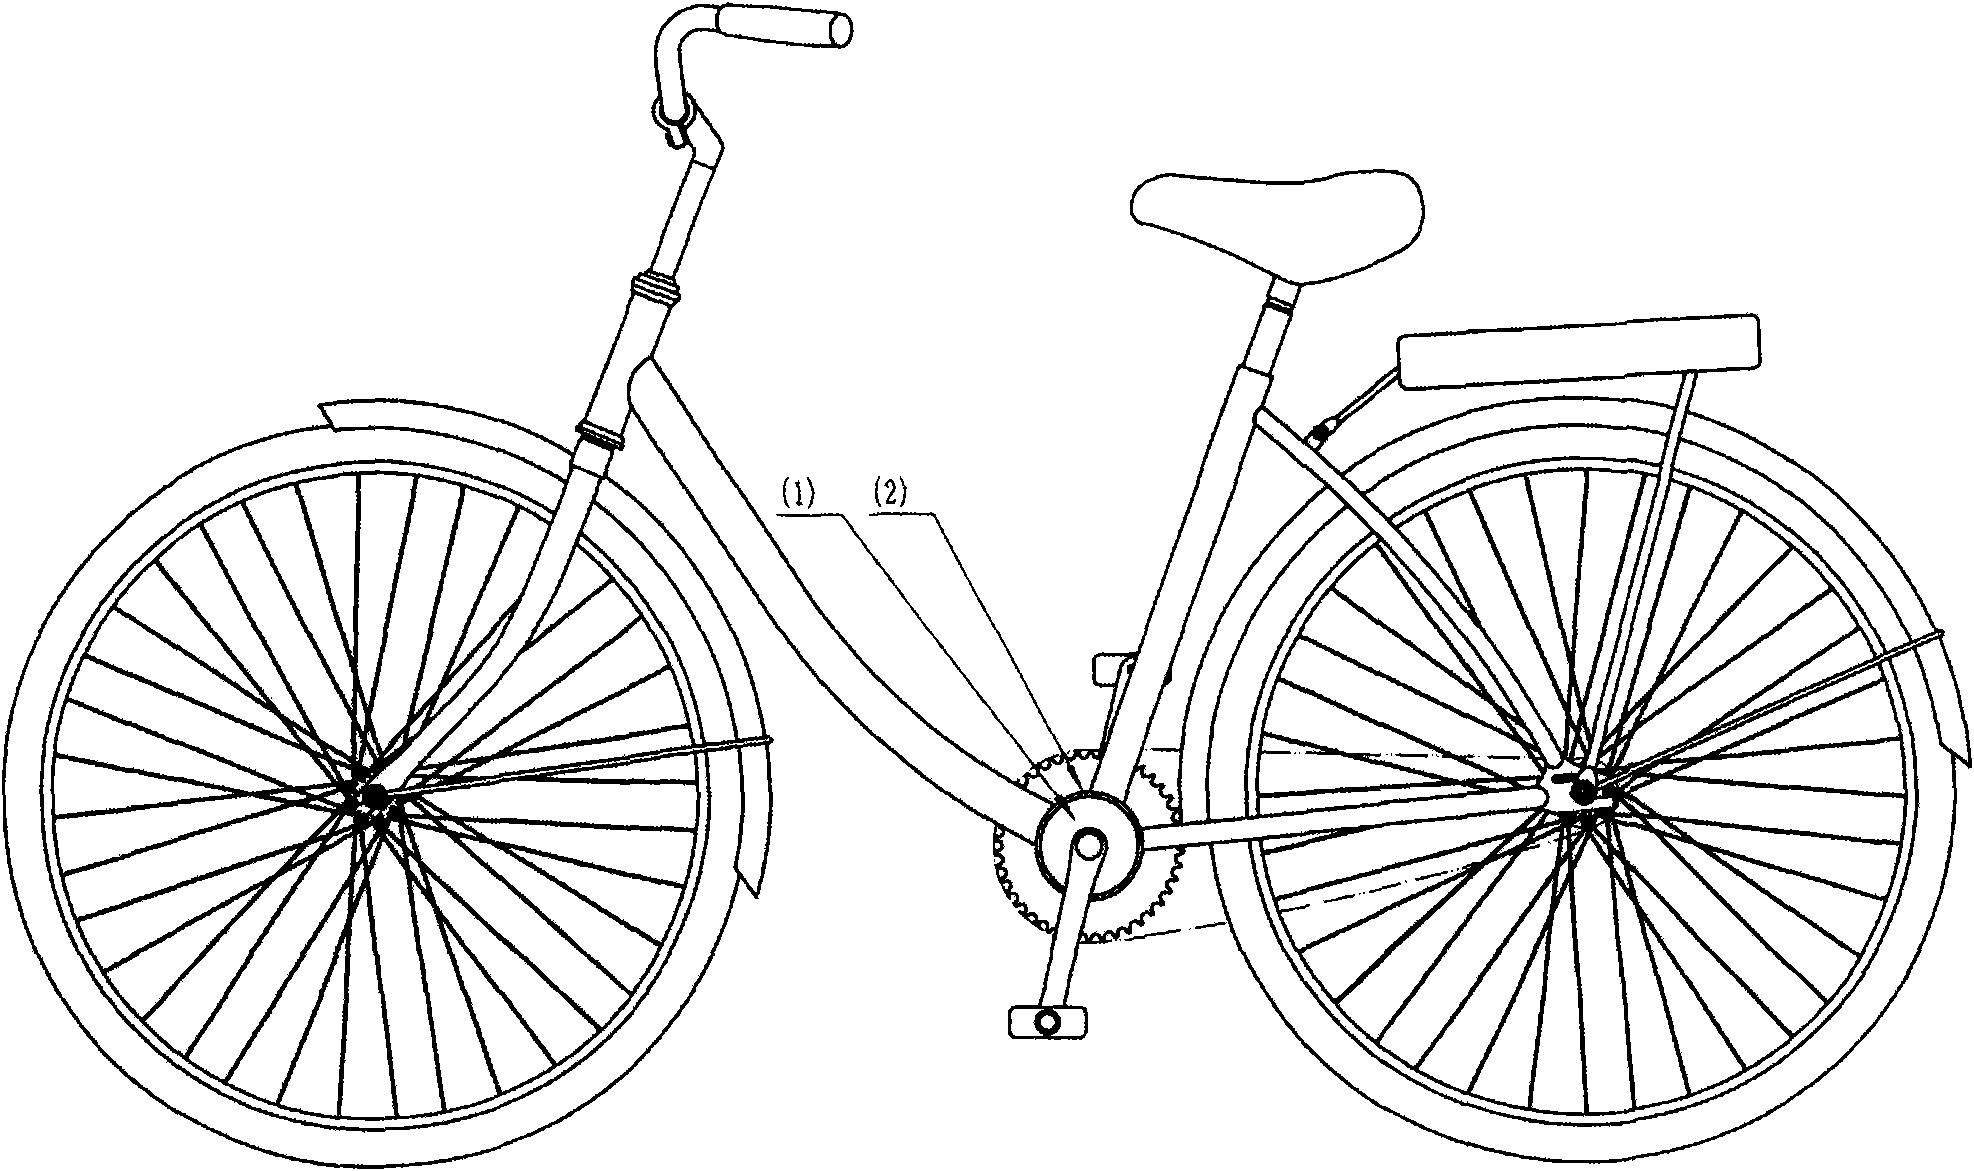 Harmonic reduction synthesized power bicycle